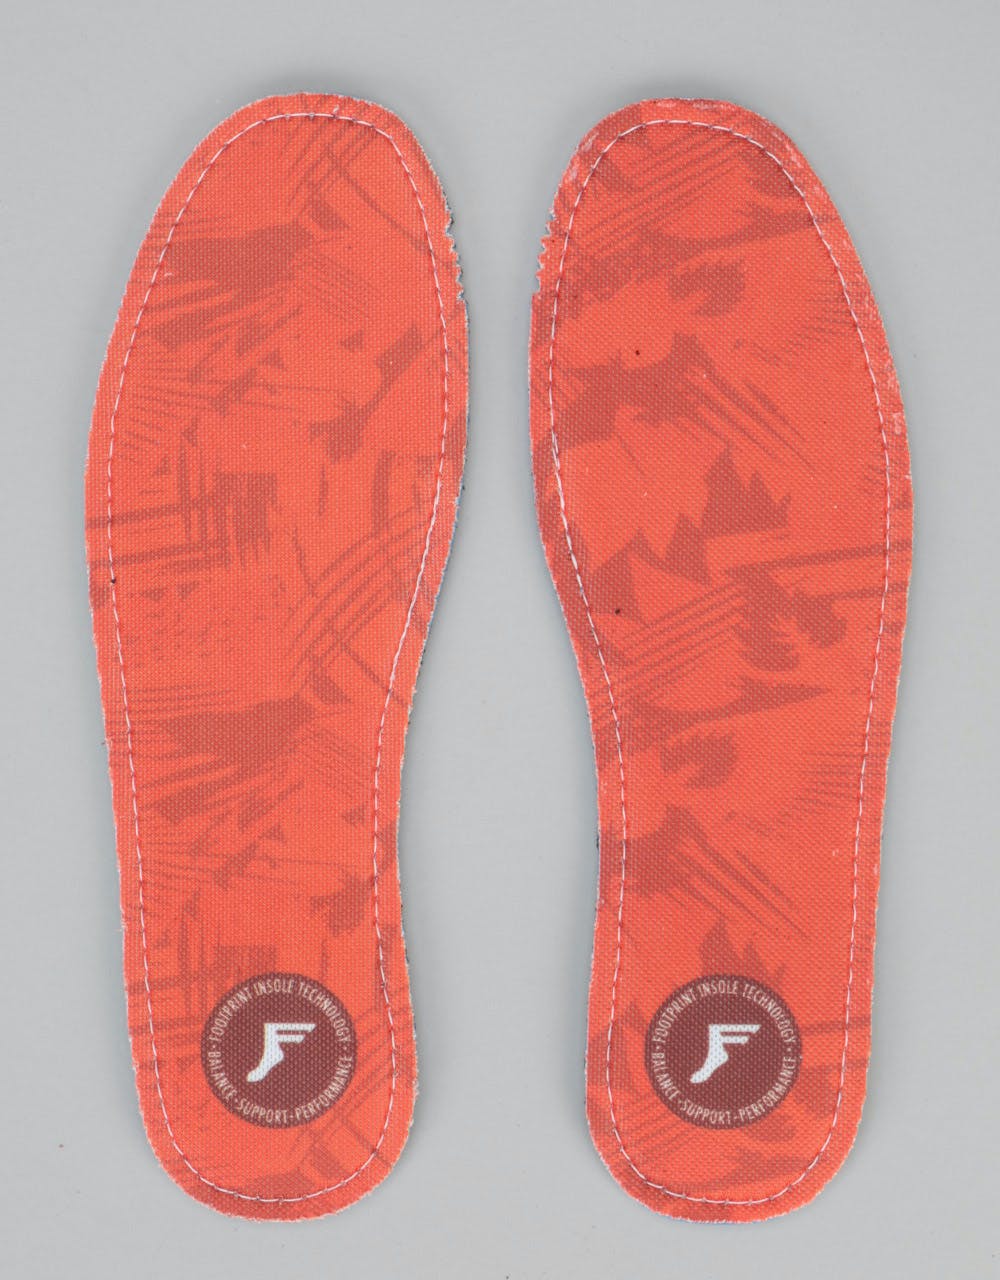 Footprint Red Camo 5mm Kingfoam Flat Insoles